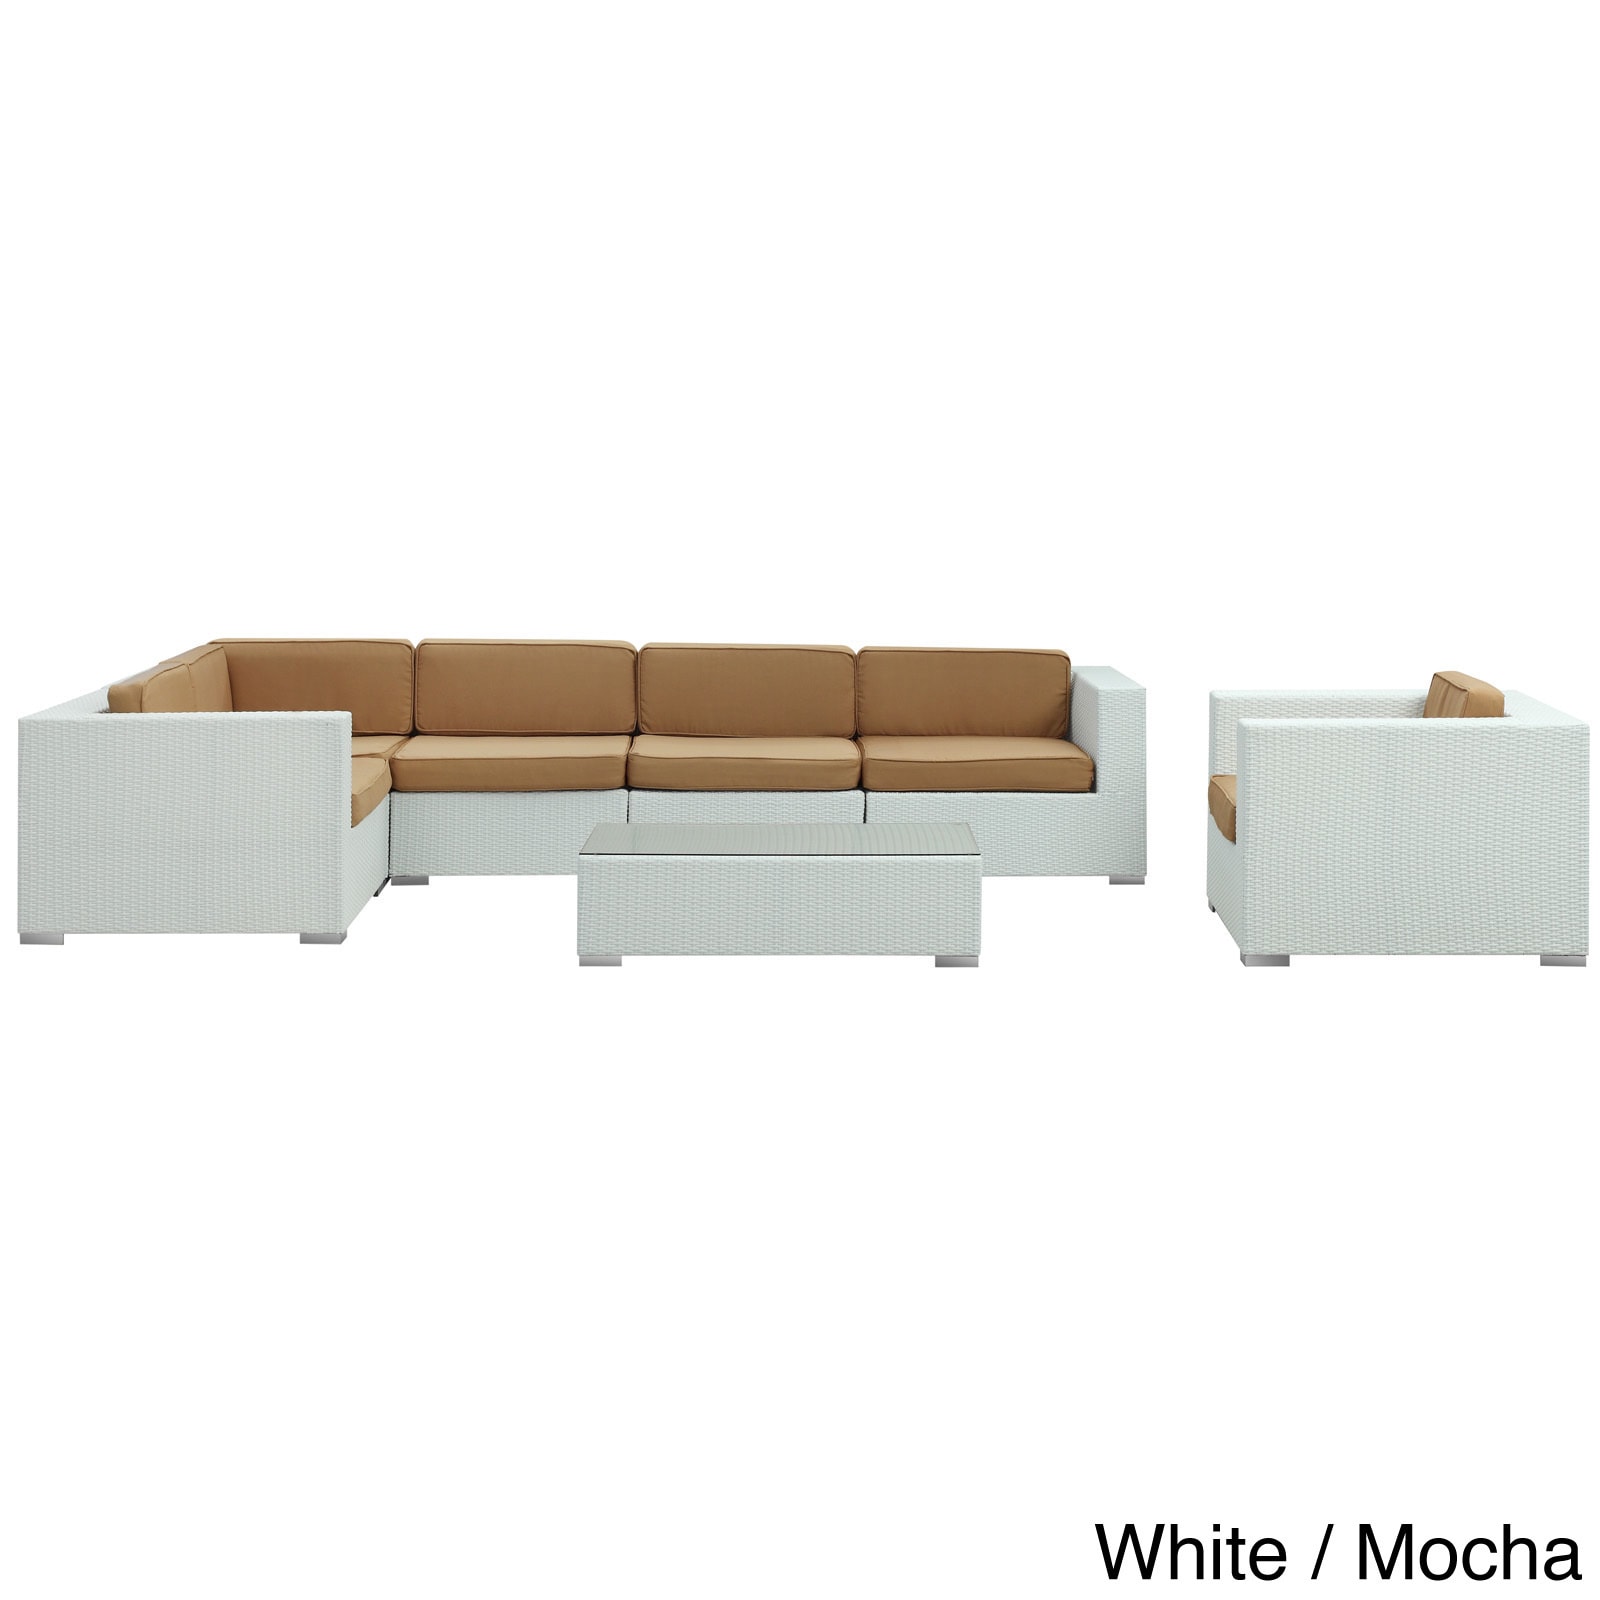 Corona Wicker Outdoor Patio 7 piece Sectional Sofa Set